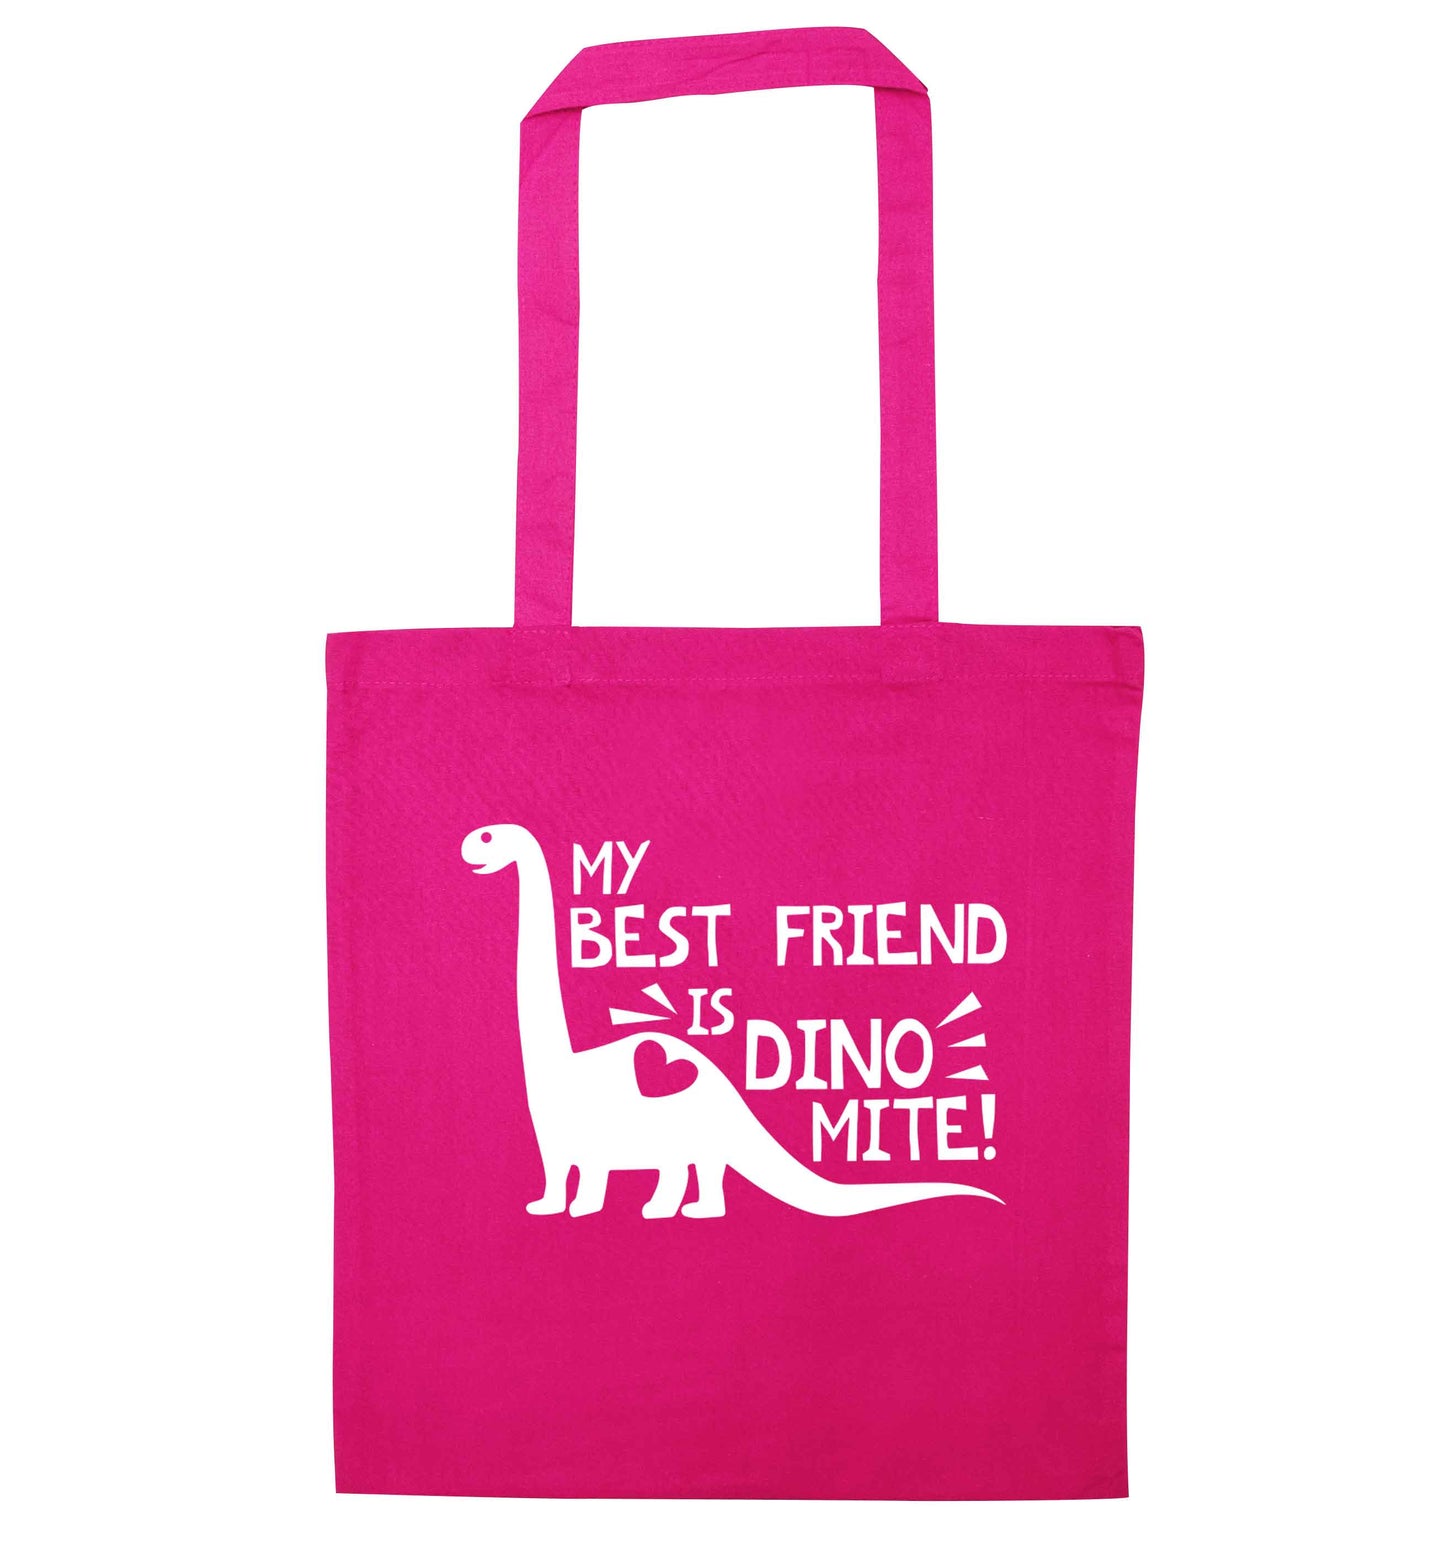 My best friend is dinomite! pink tote bag